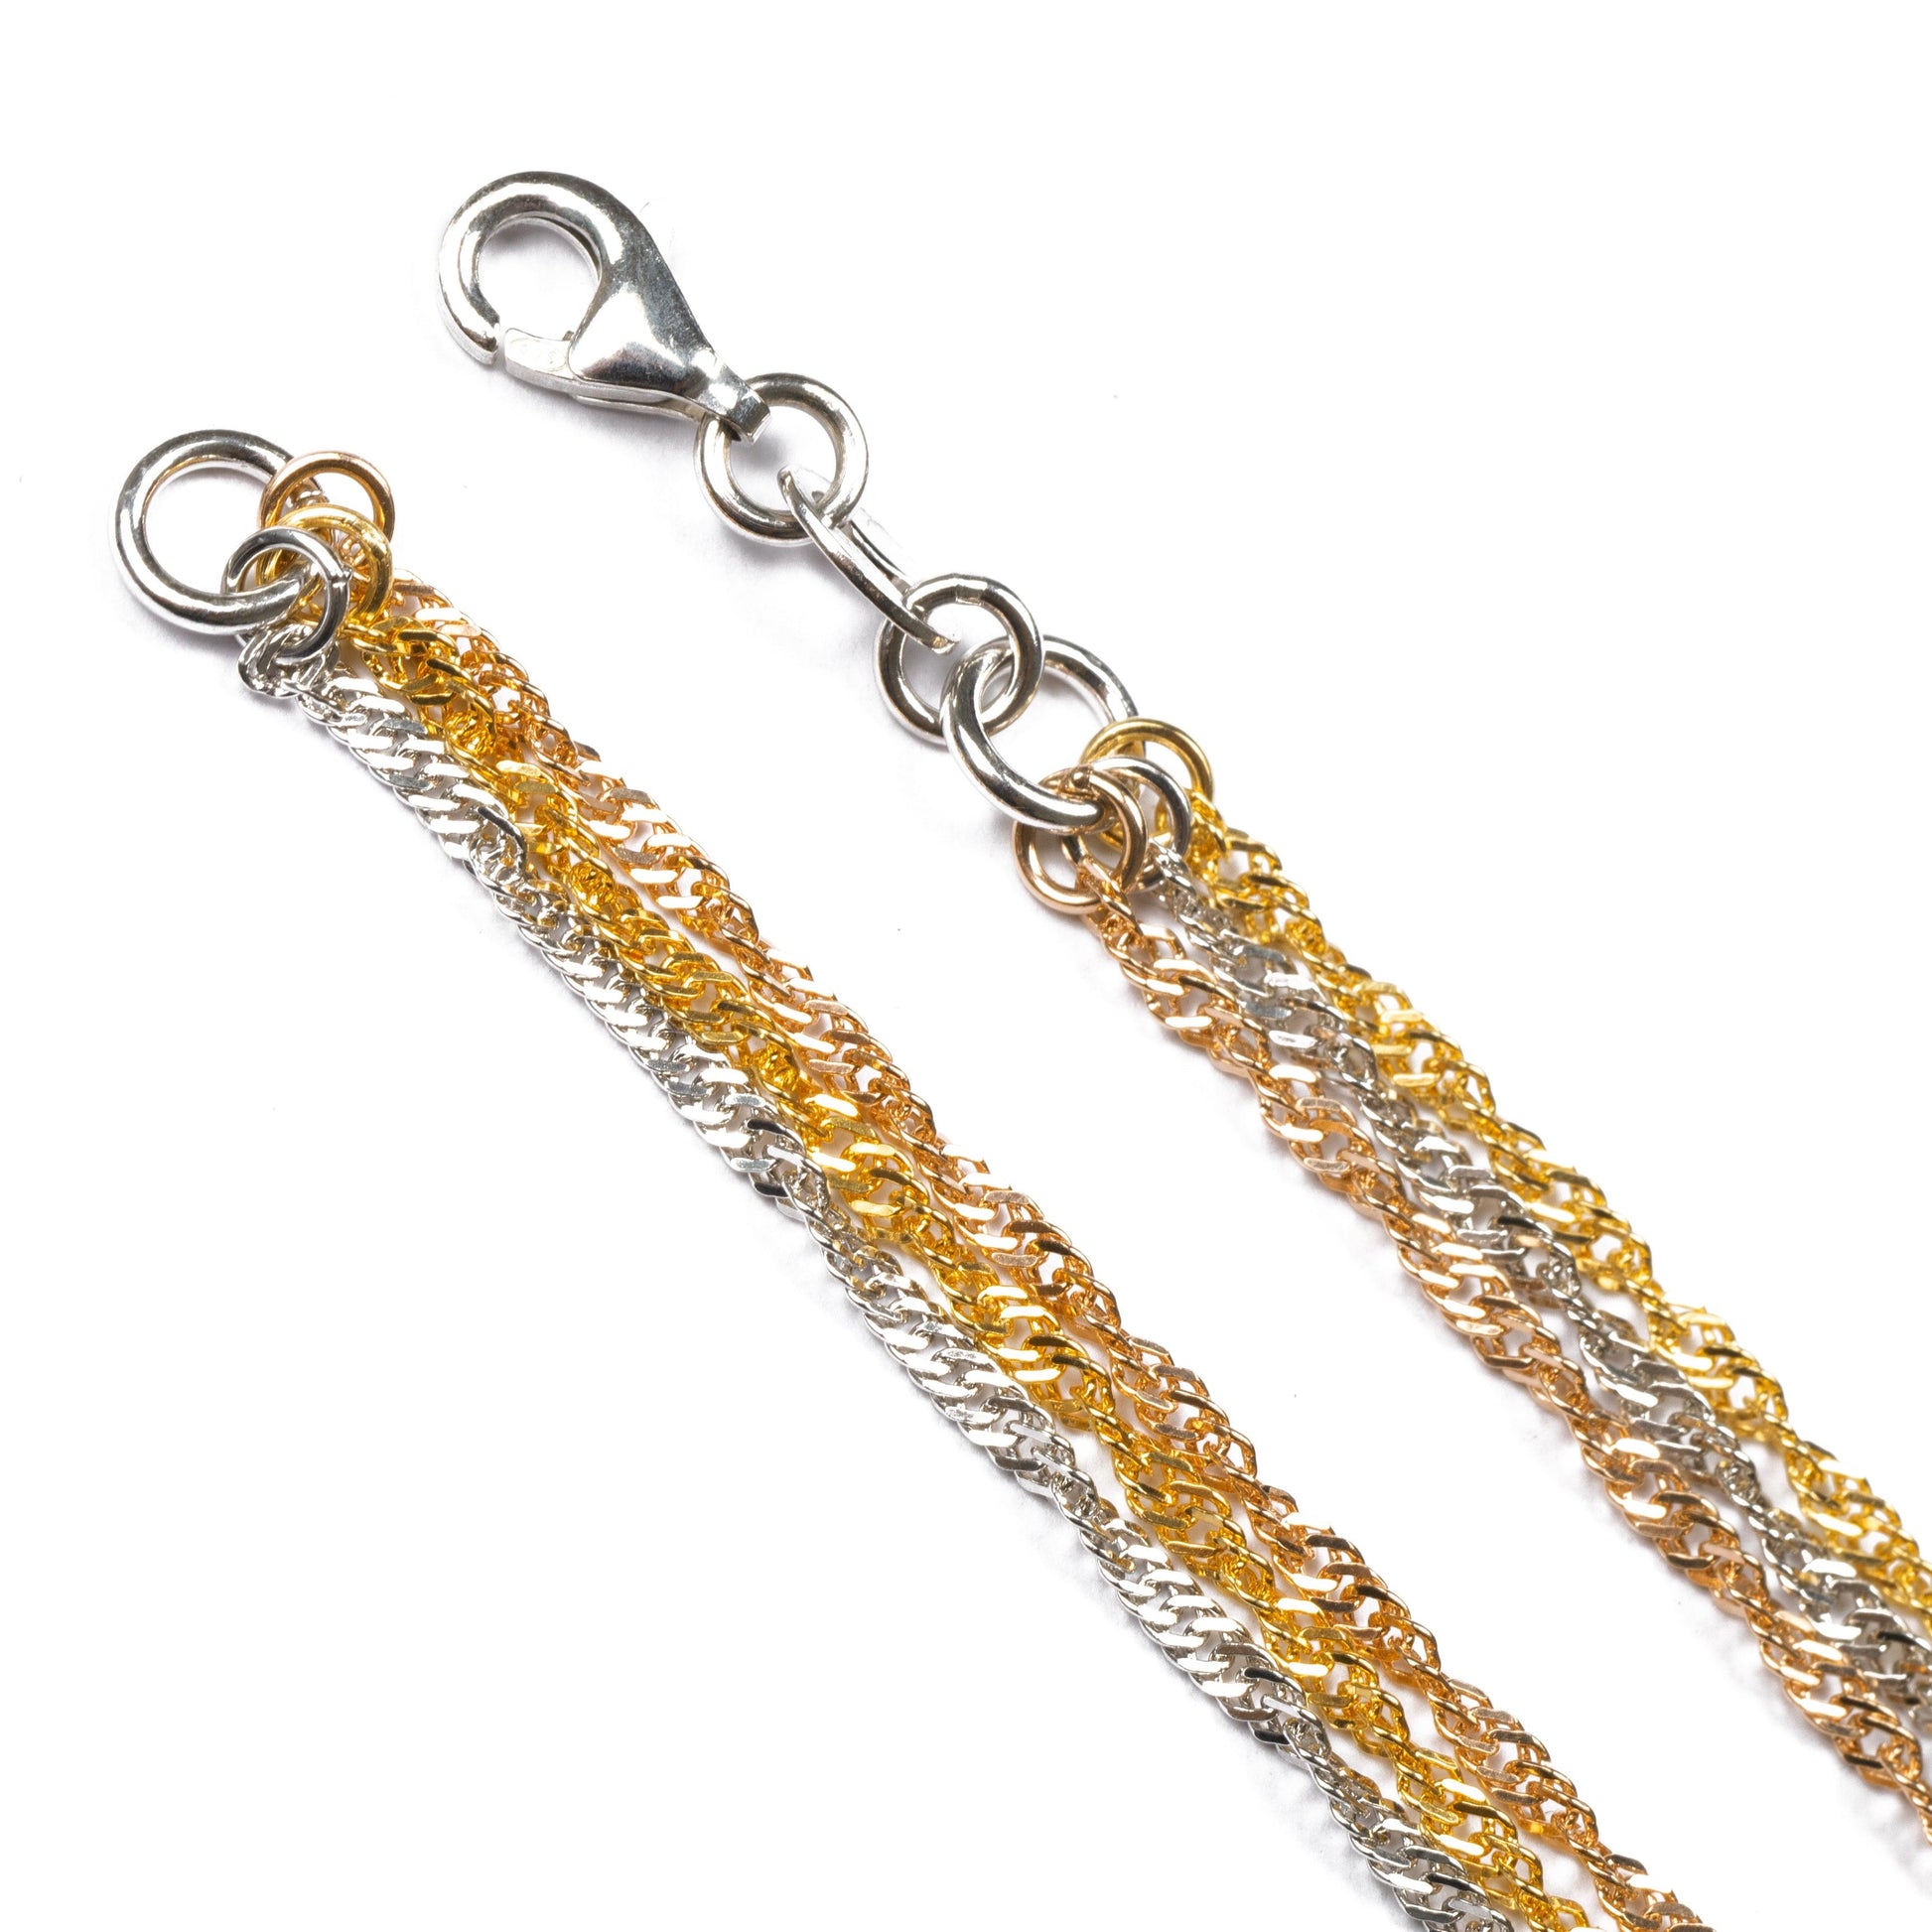 Gold Plated Three Tone Sterling Silver Bracelet SBR161B - Minar Jewellers